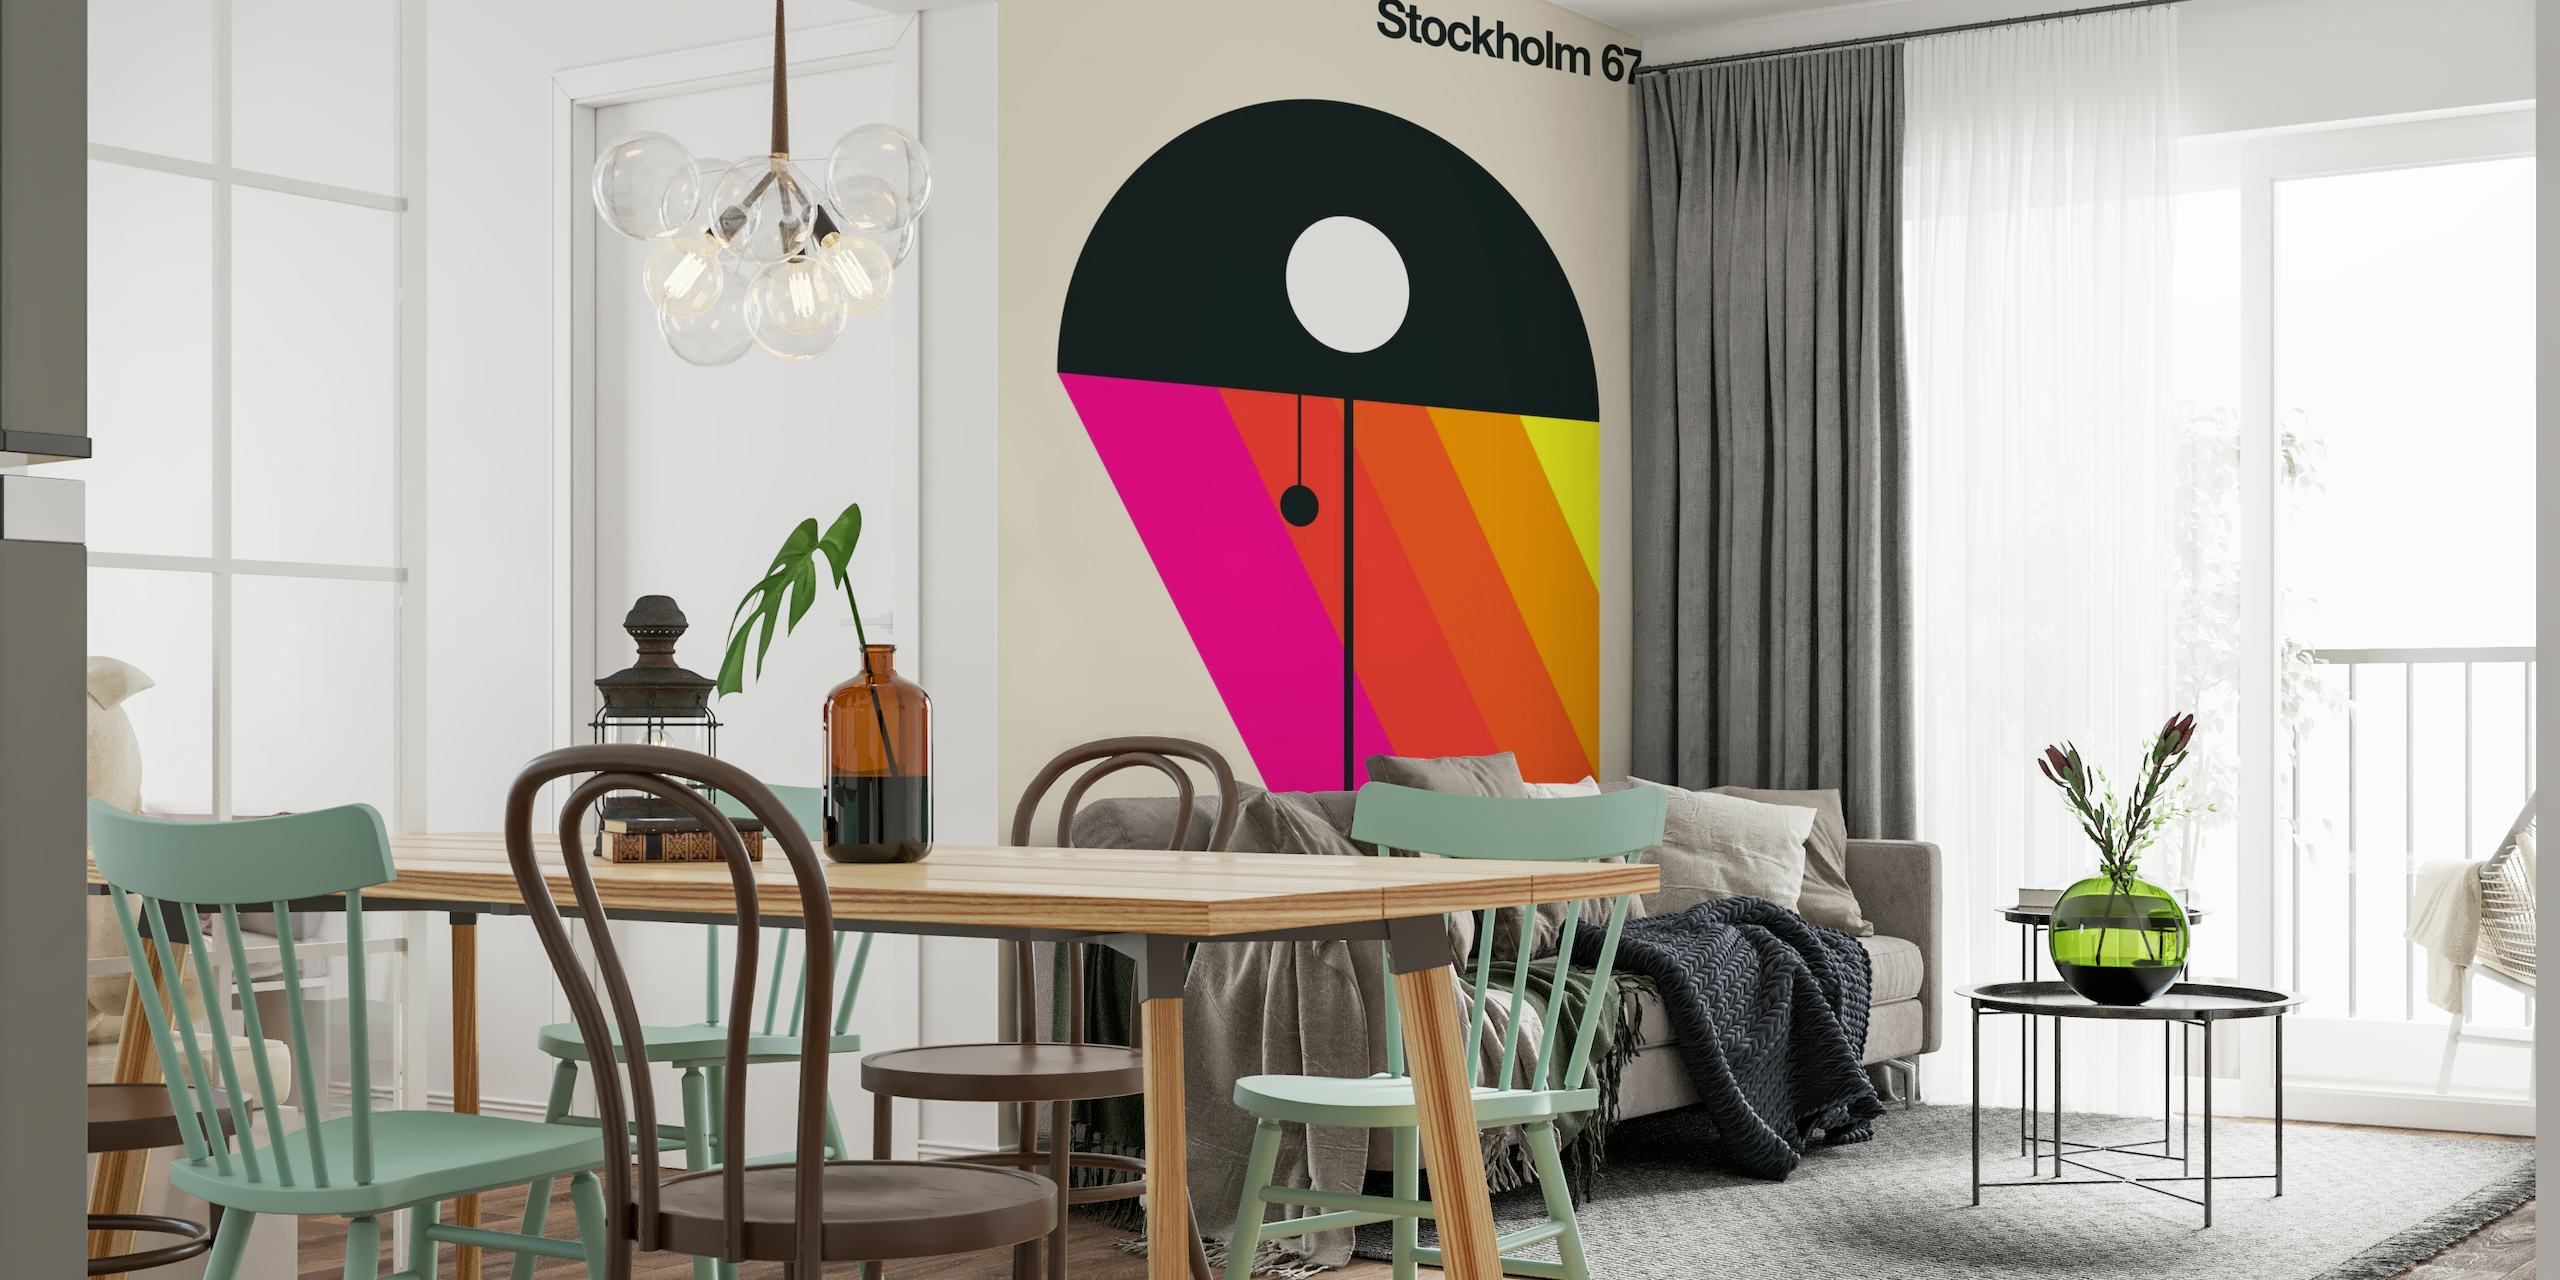 Stockholm 67 wallpaper